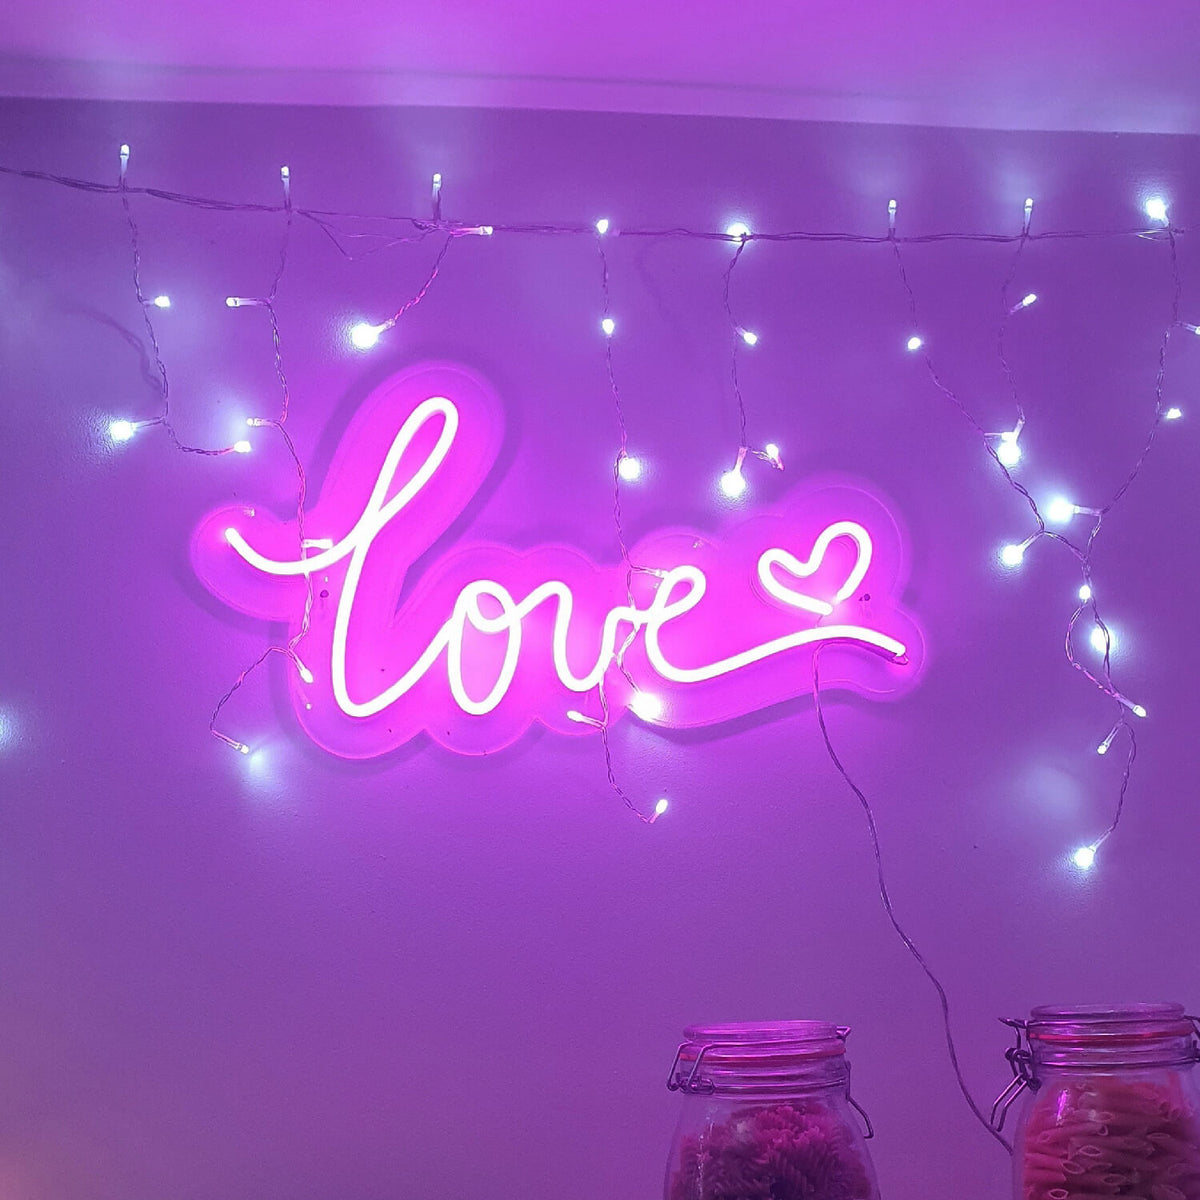 Love heart neon sign